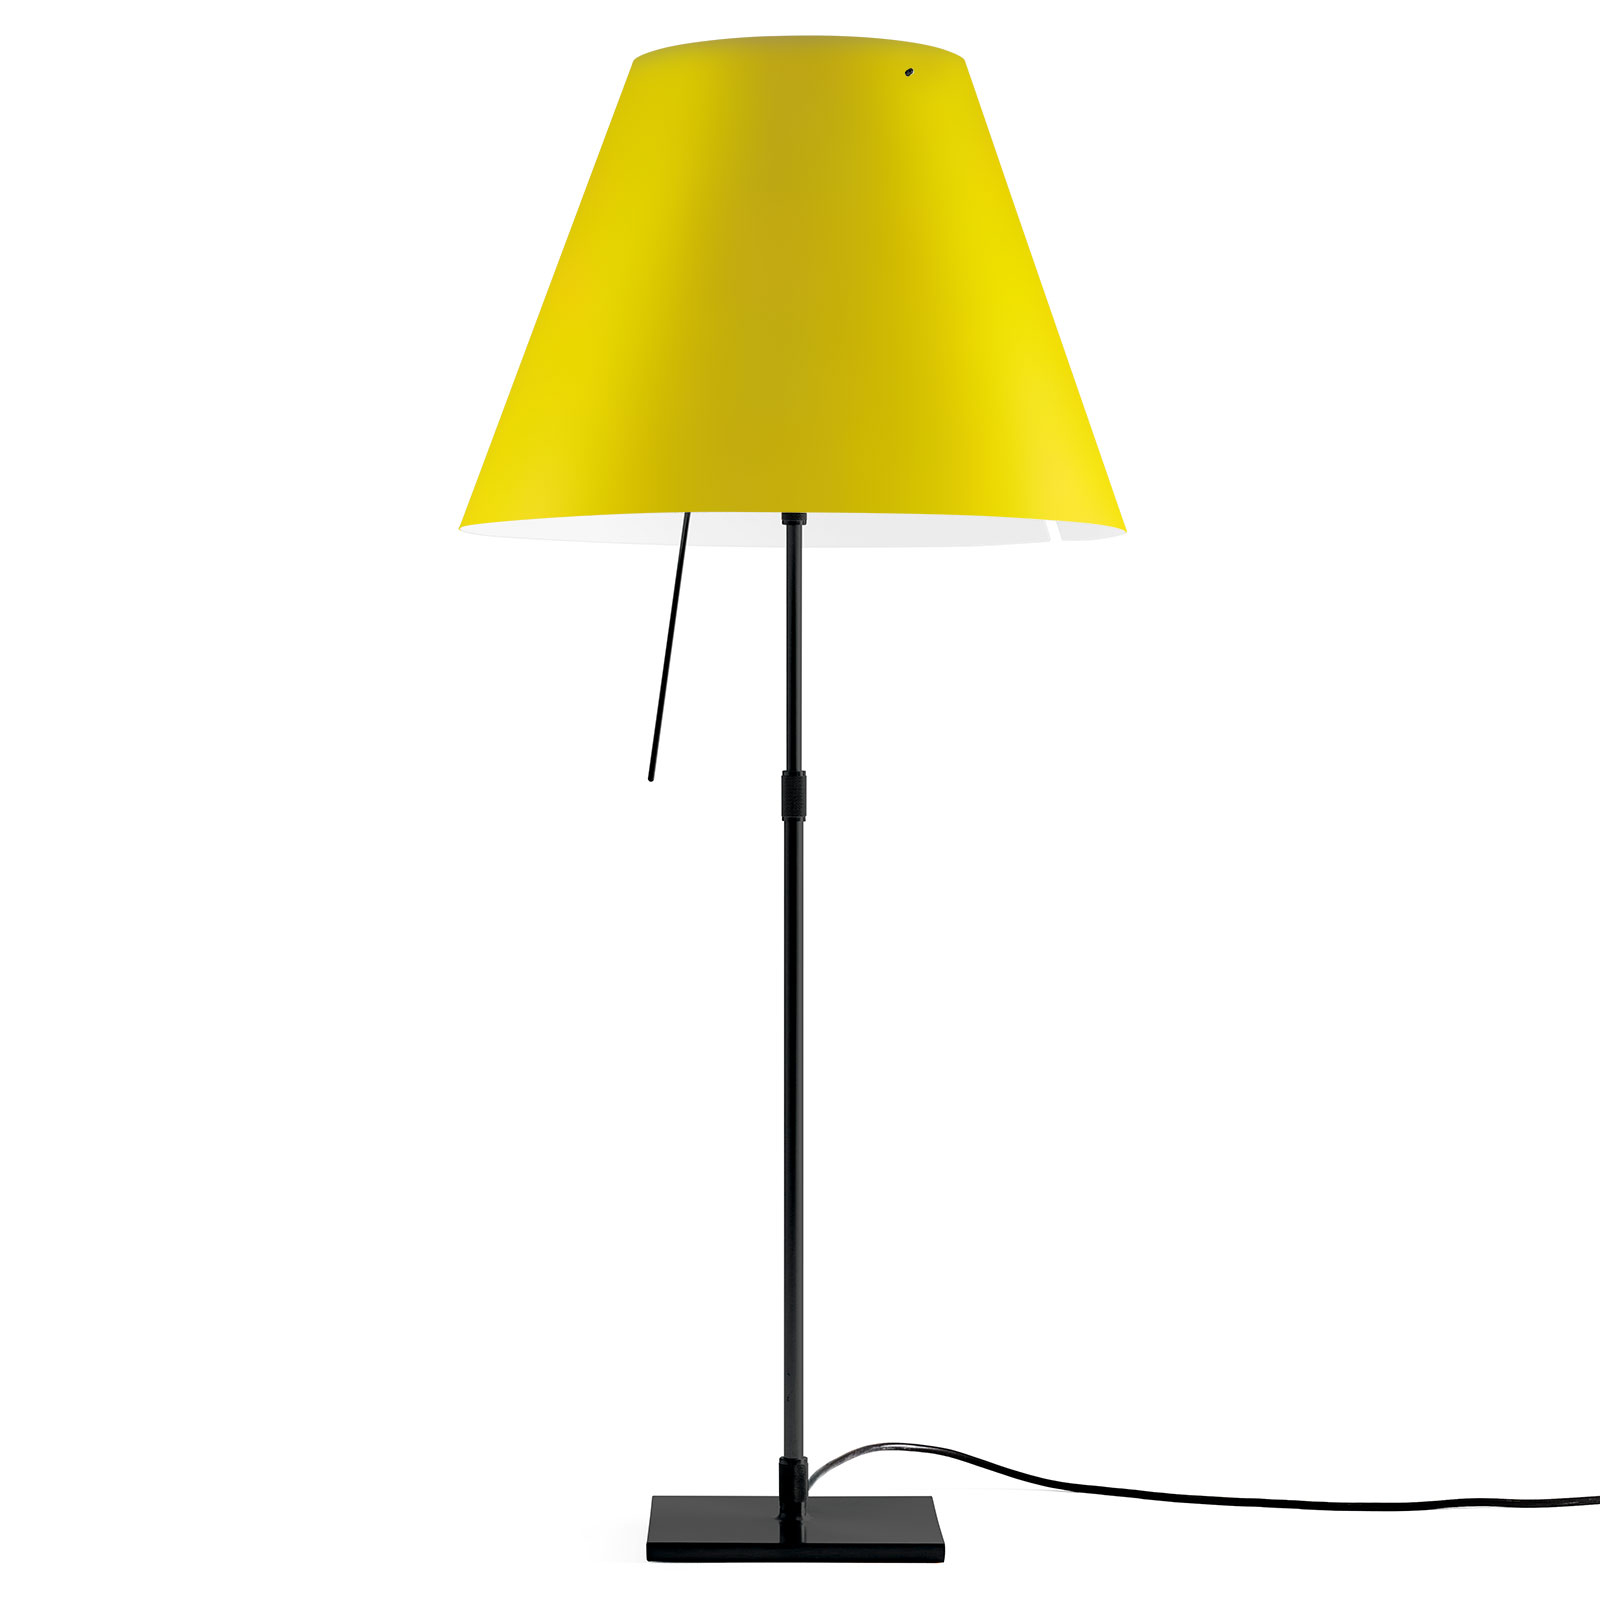 Luceplan Costanza lampe à poser D13 noire/jaune